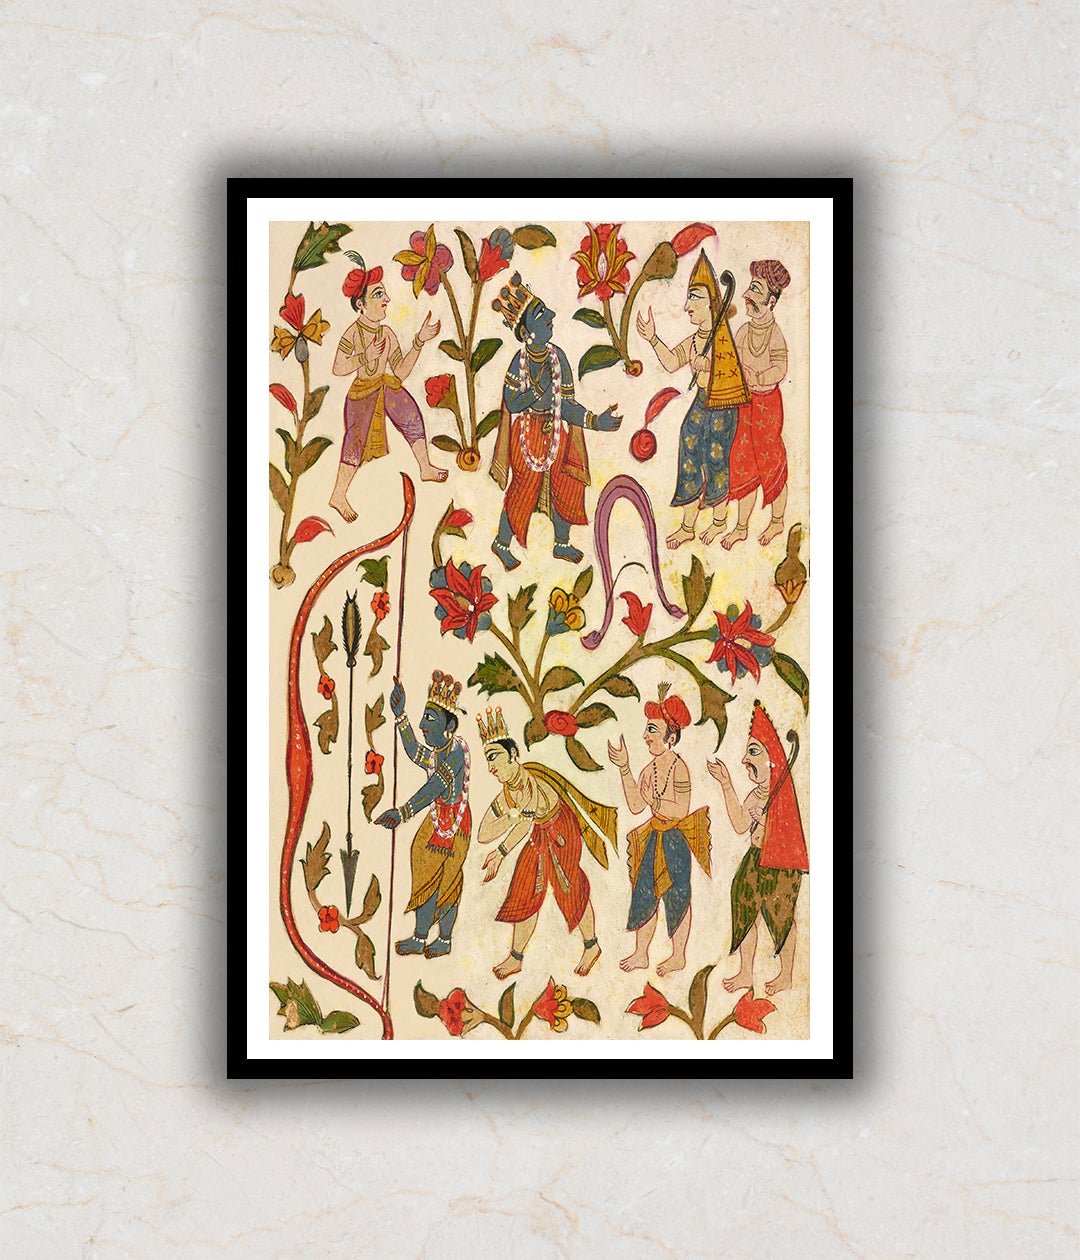 Krishna & The Bow, Folio 24 From The ÌÓTula Ram̥ Bhagavata Purana Artwork Painting For Home Wall Art D�_cor